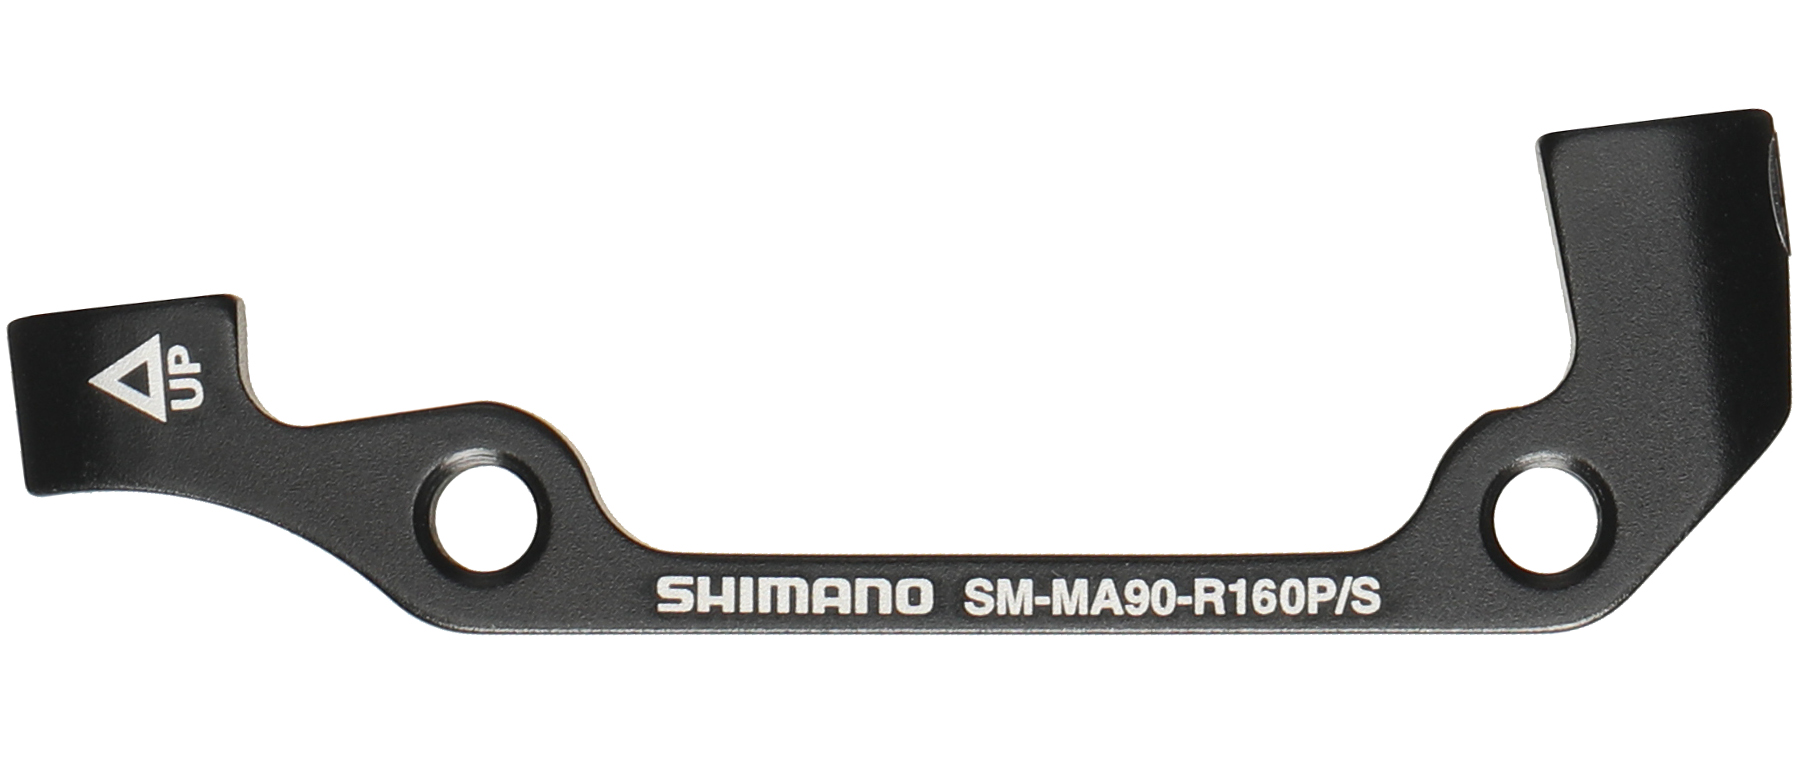 Shimano SM-MA90 Disc Brake Adapter